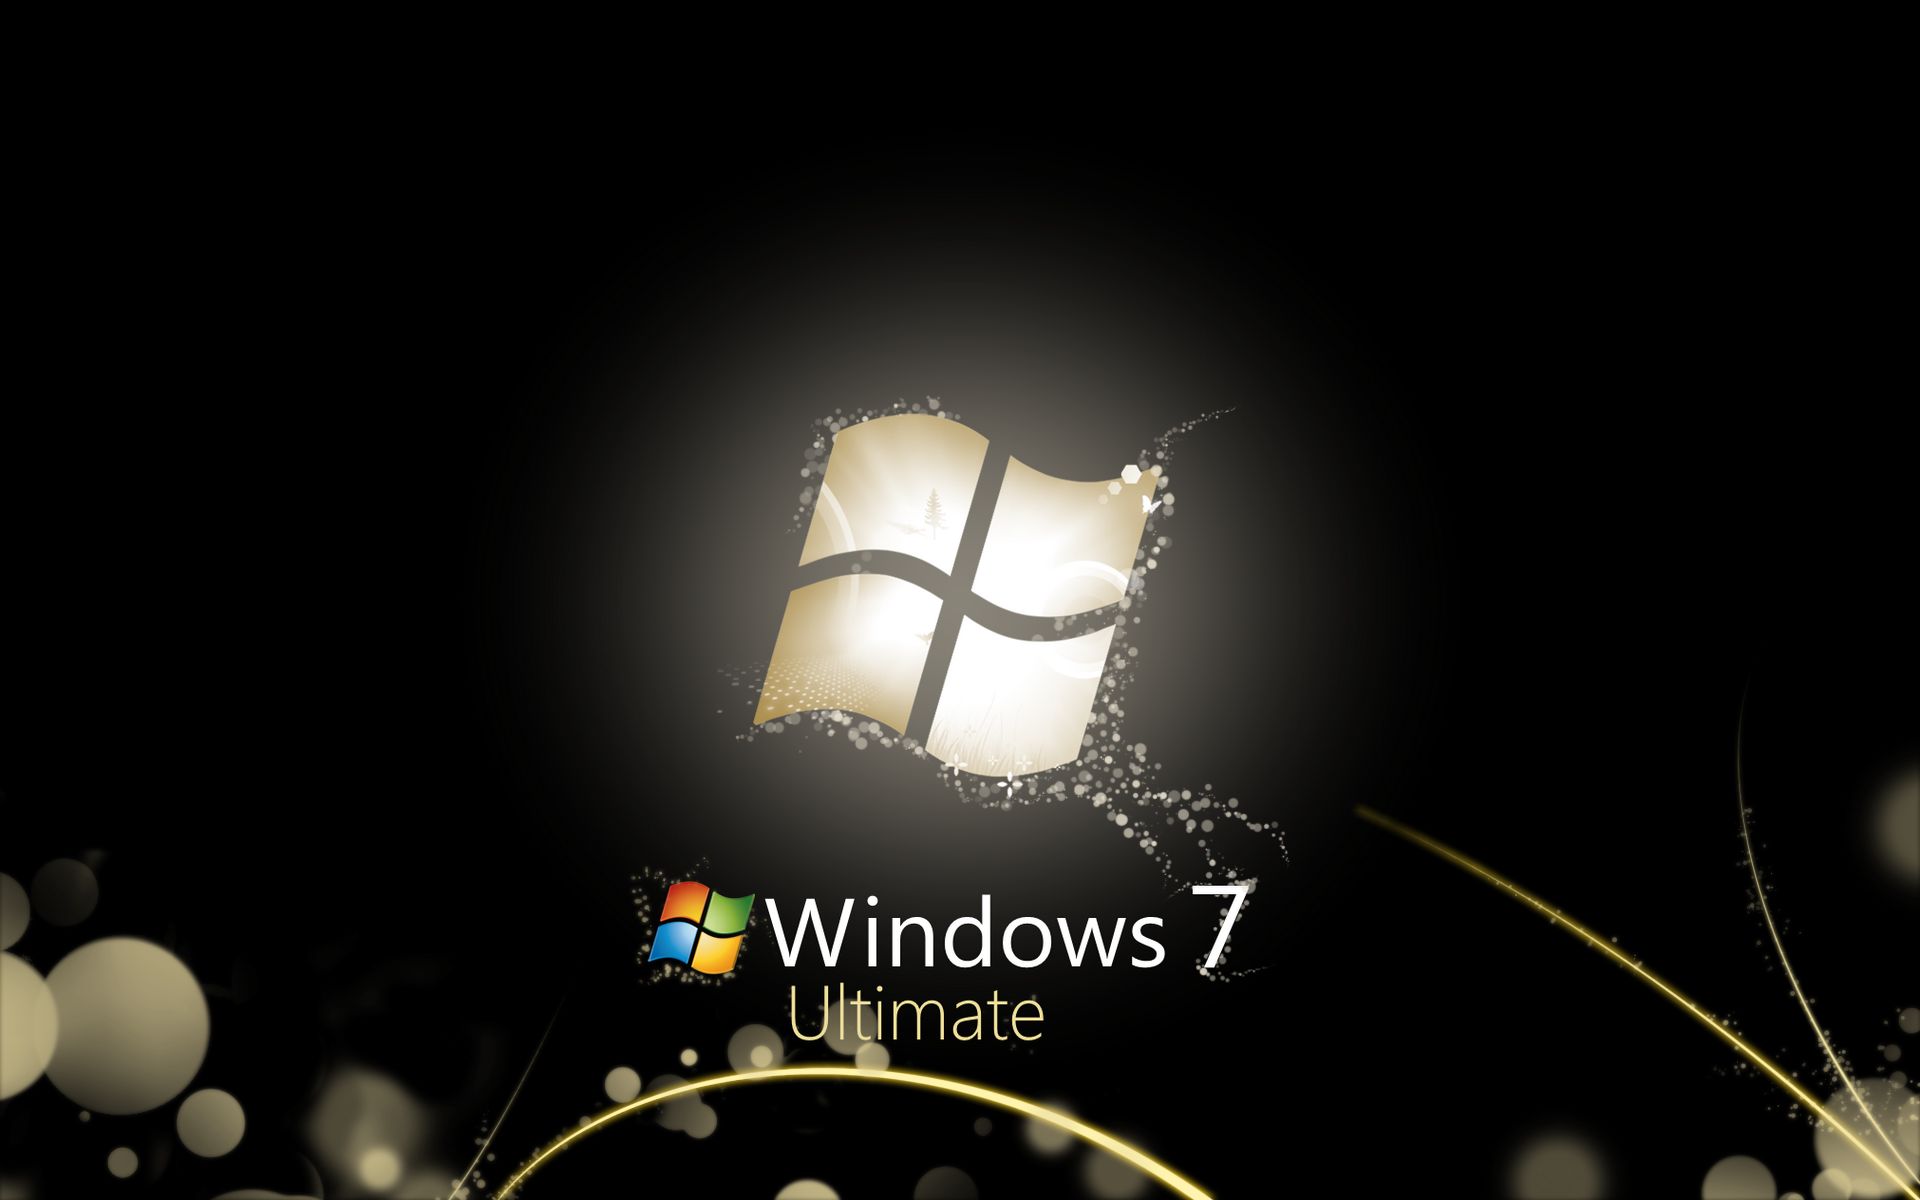 windows ultimate, windows, windows 7, microsoft, technology, windows 7 ultimate